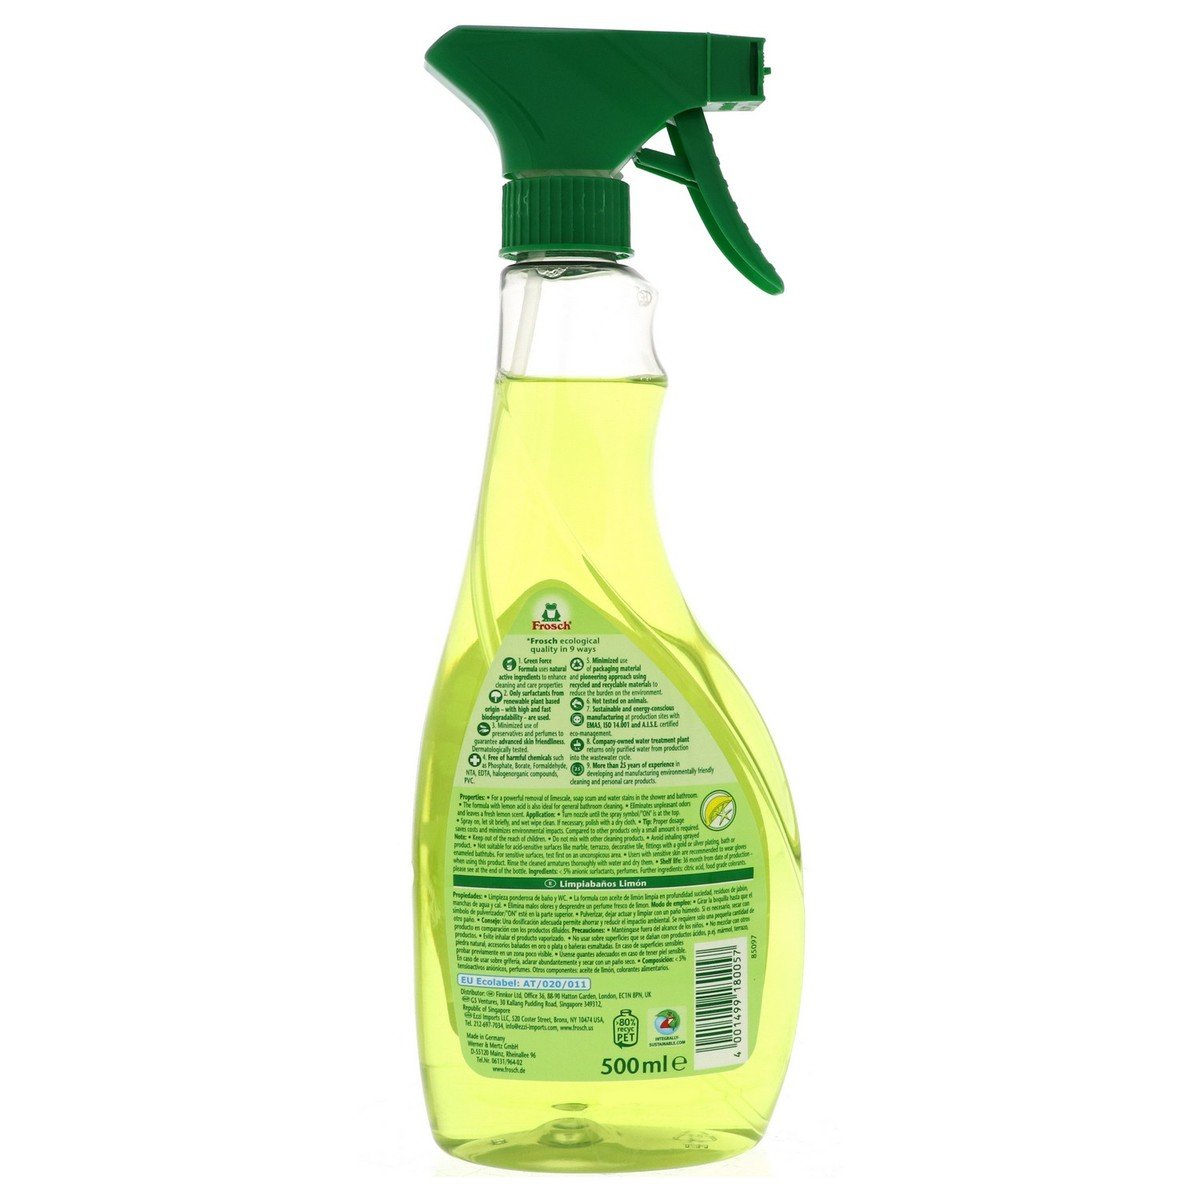 Frosch Shower & Bath Cleaner Lemon 500ml